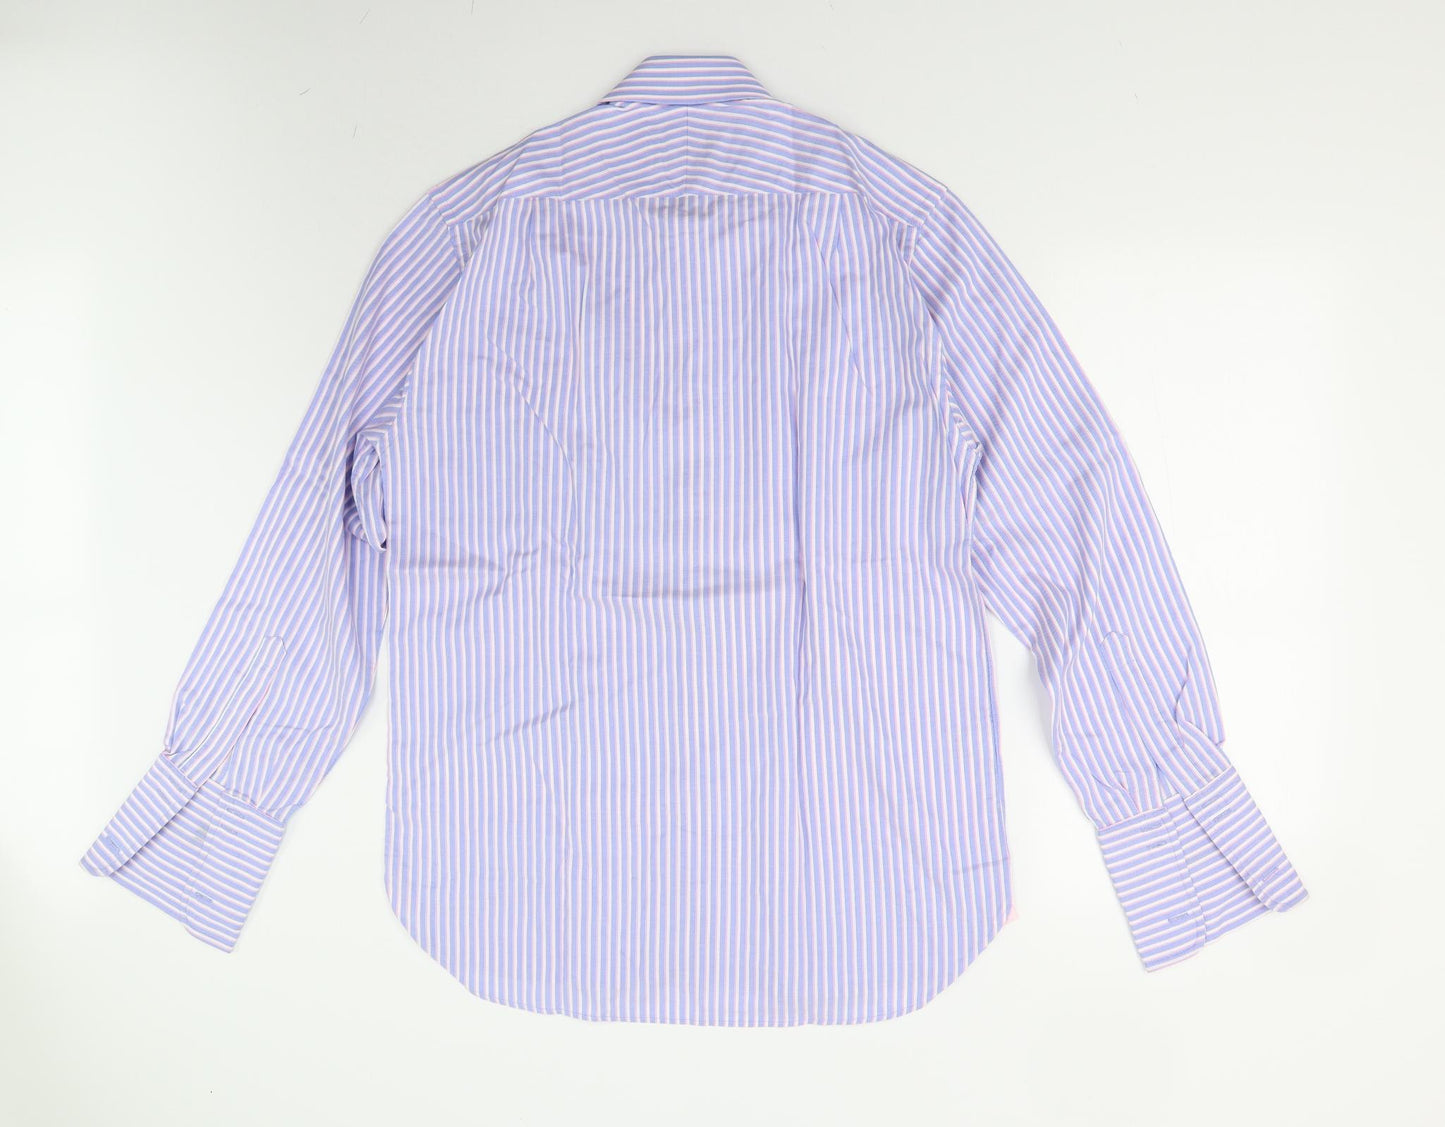 M&S Mens Multicoloured Striped   Dress Shirt Size 15.5